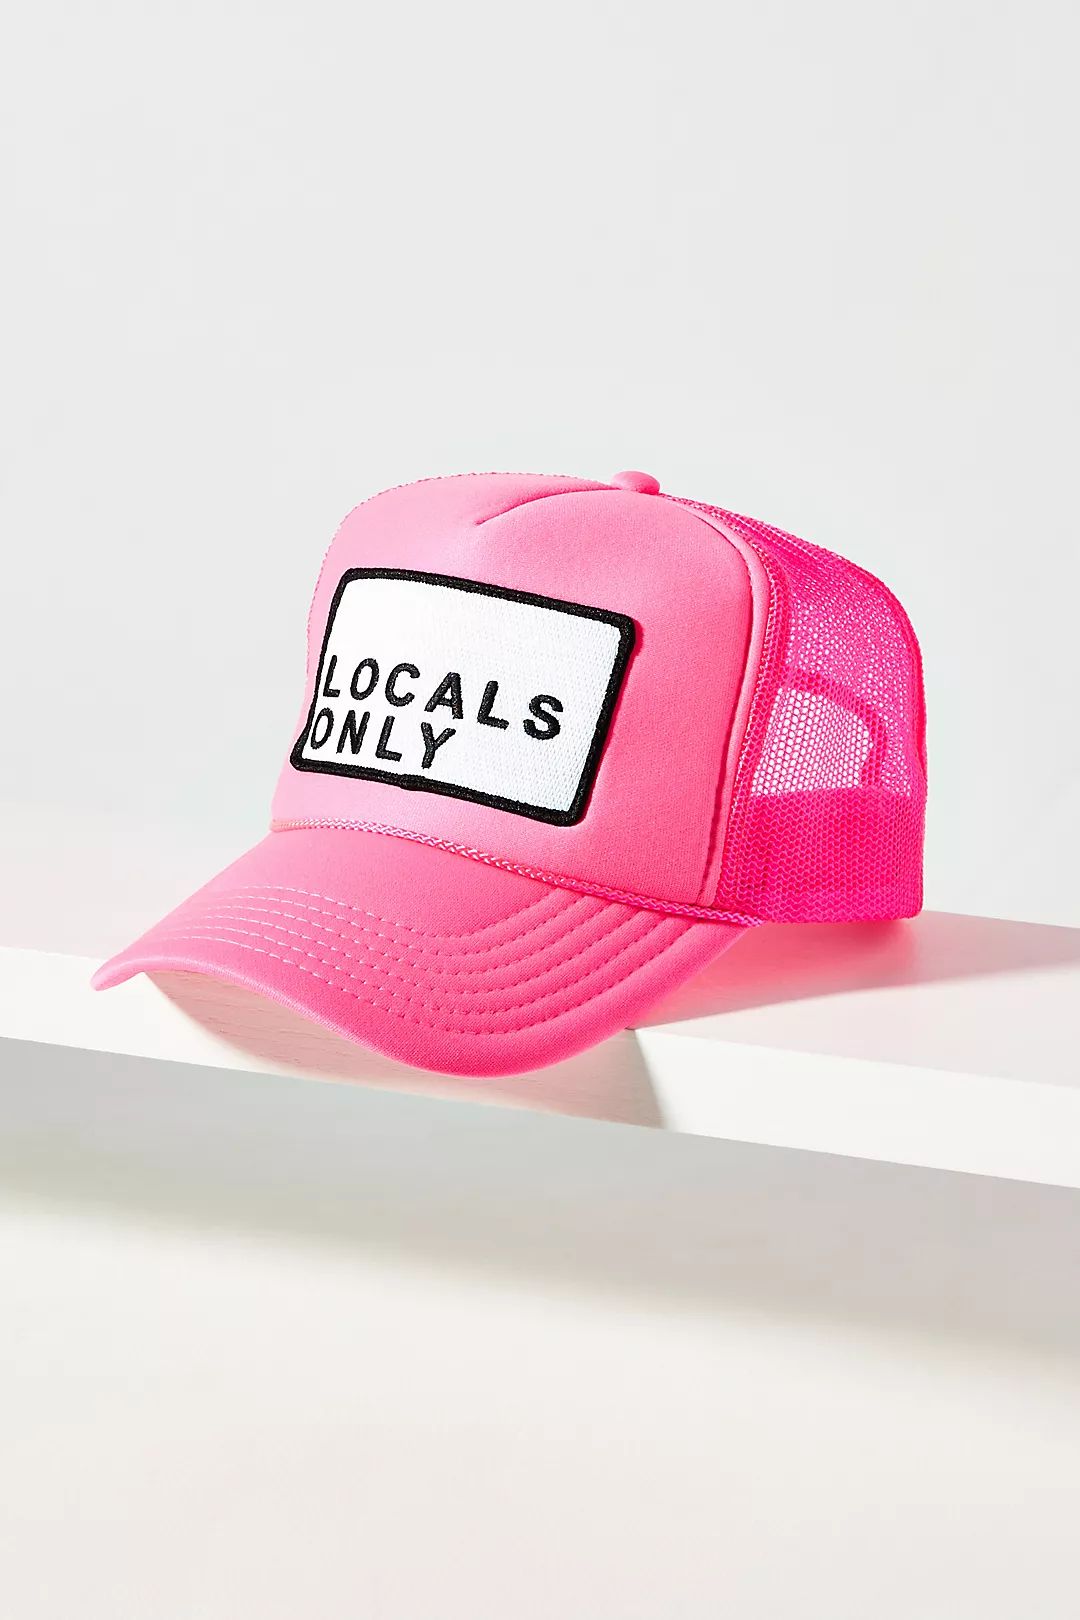 Friday Feelin Locals Only Trucker Hat | Anthropologie (US)